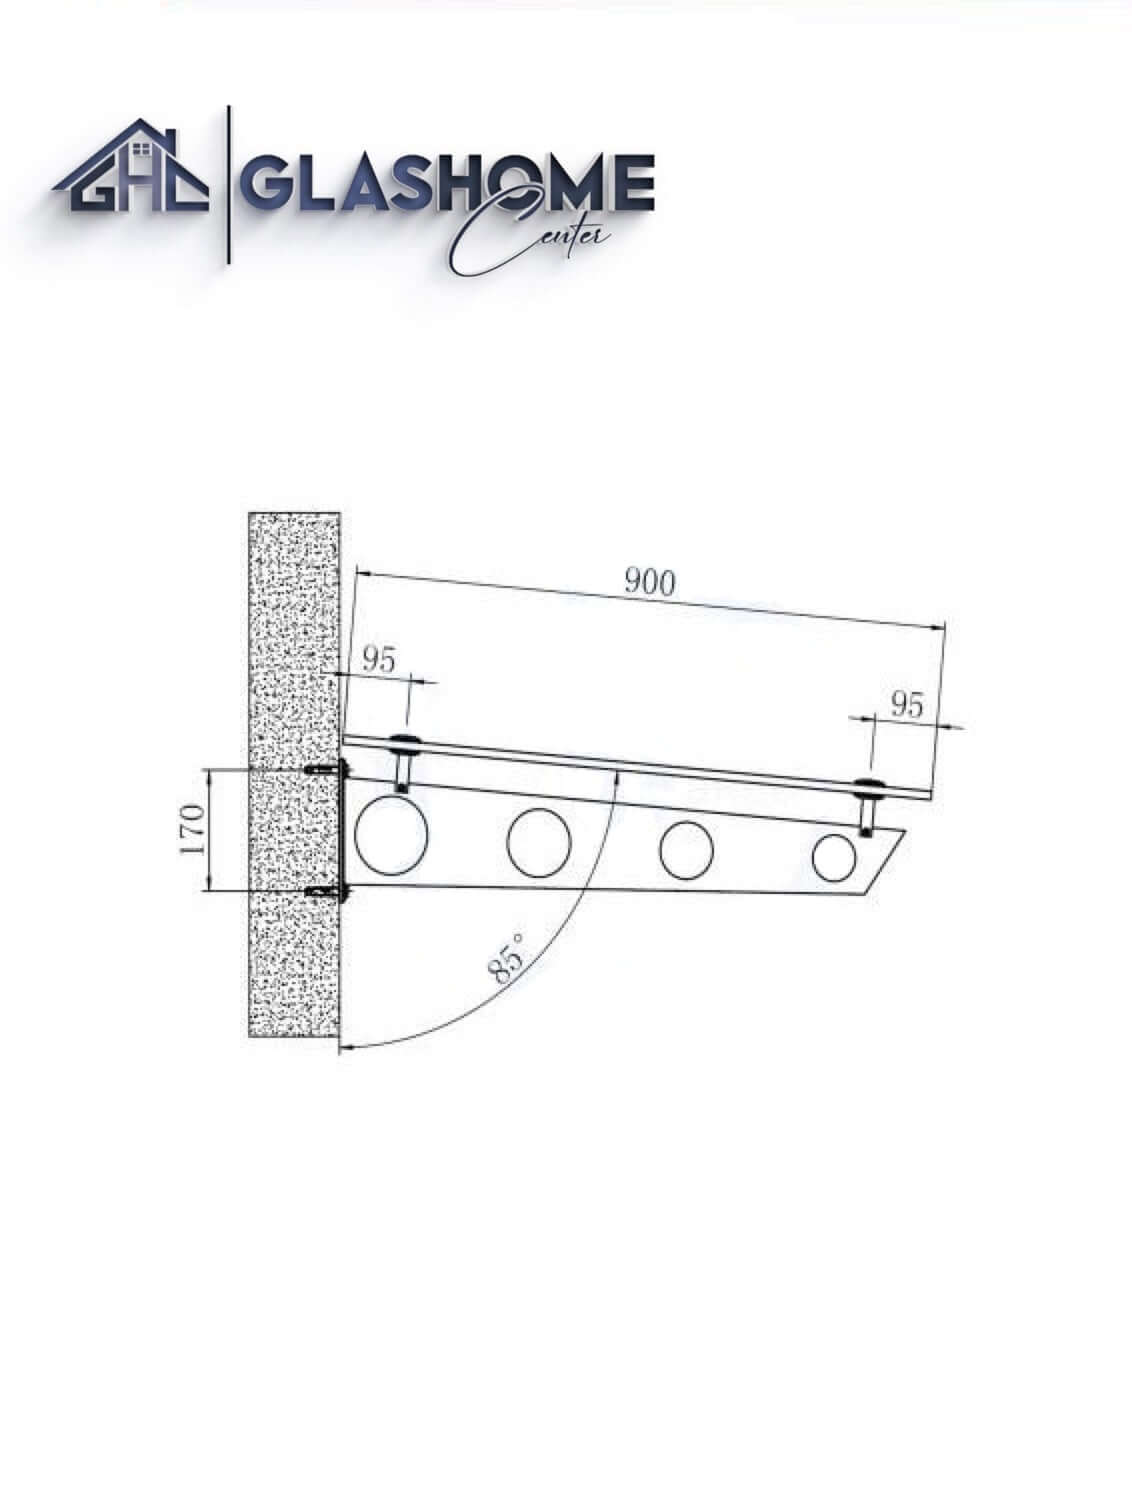 GlasHomeCenter - glass canopy - Clear glass - 200x90cm - 13.1mm VSG - incl. 3 schwarze Edelstahlhalterungen Variante "Stockholm"